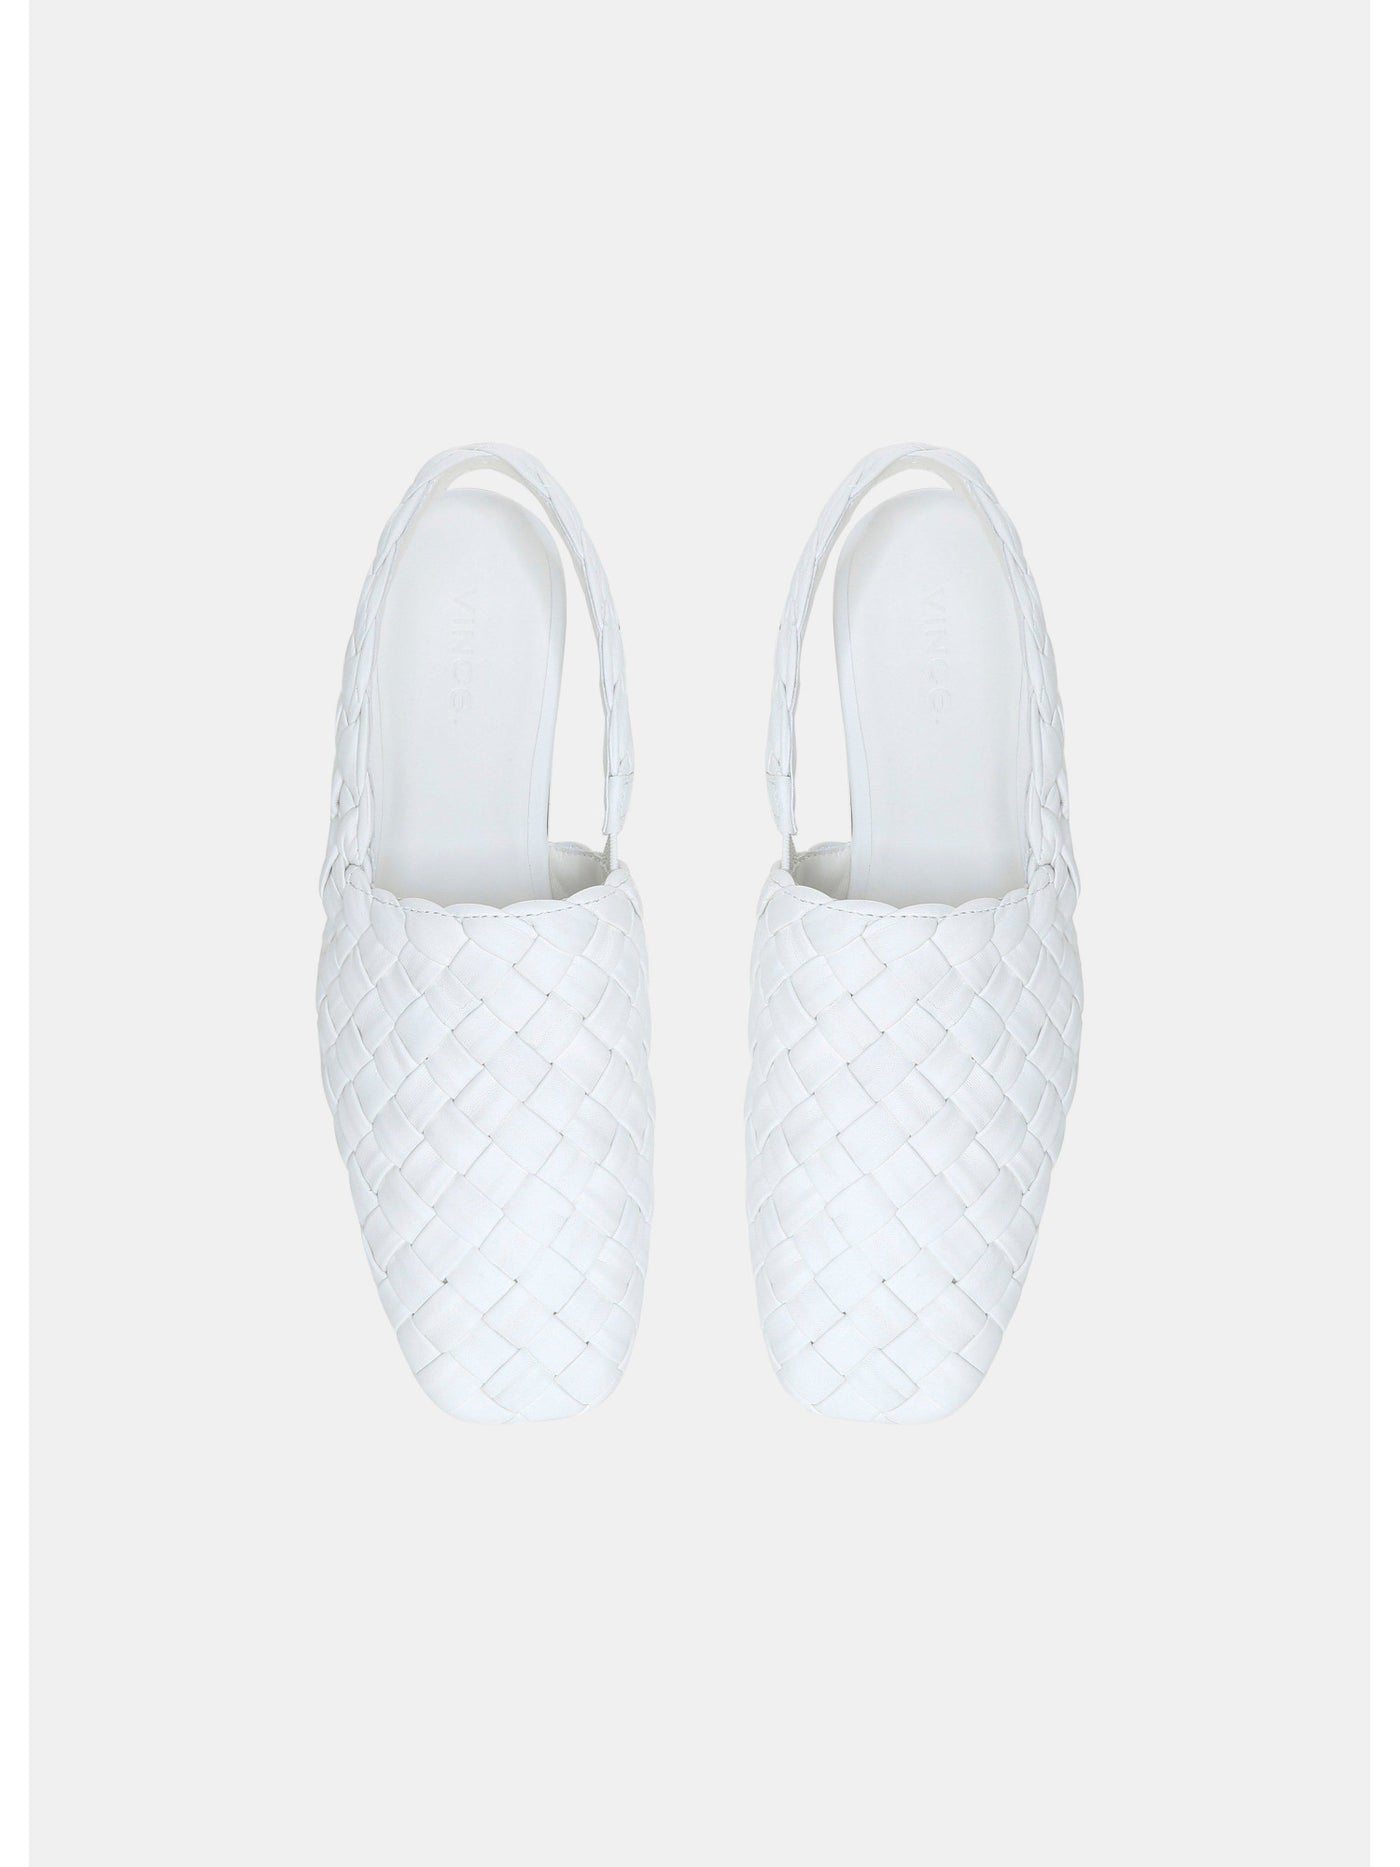 VINCE. Womens White Slingback Elastic Goring Woven Padded Cadot Square Toe Block Heel Slip On Flats Shoes 7 M